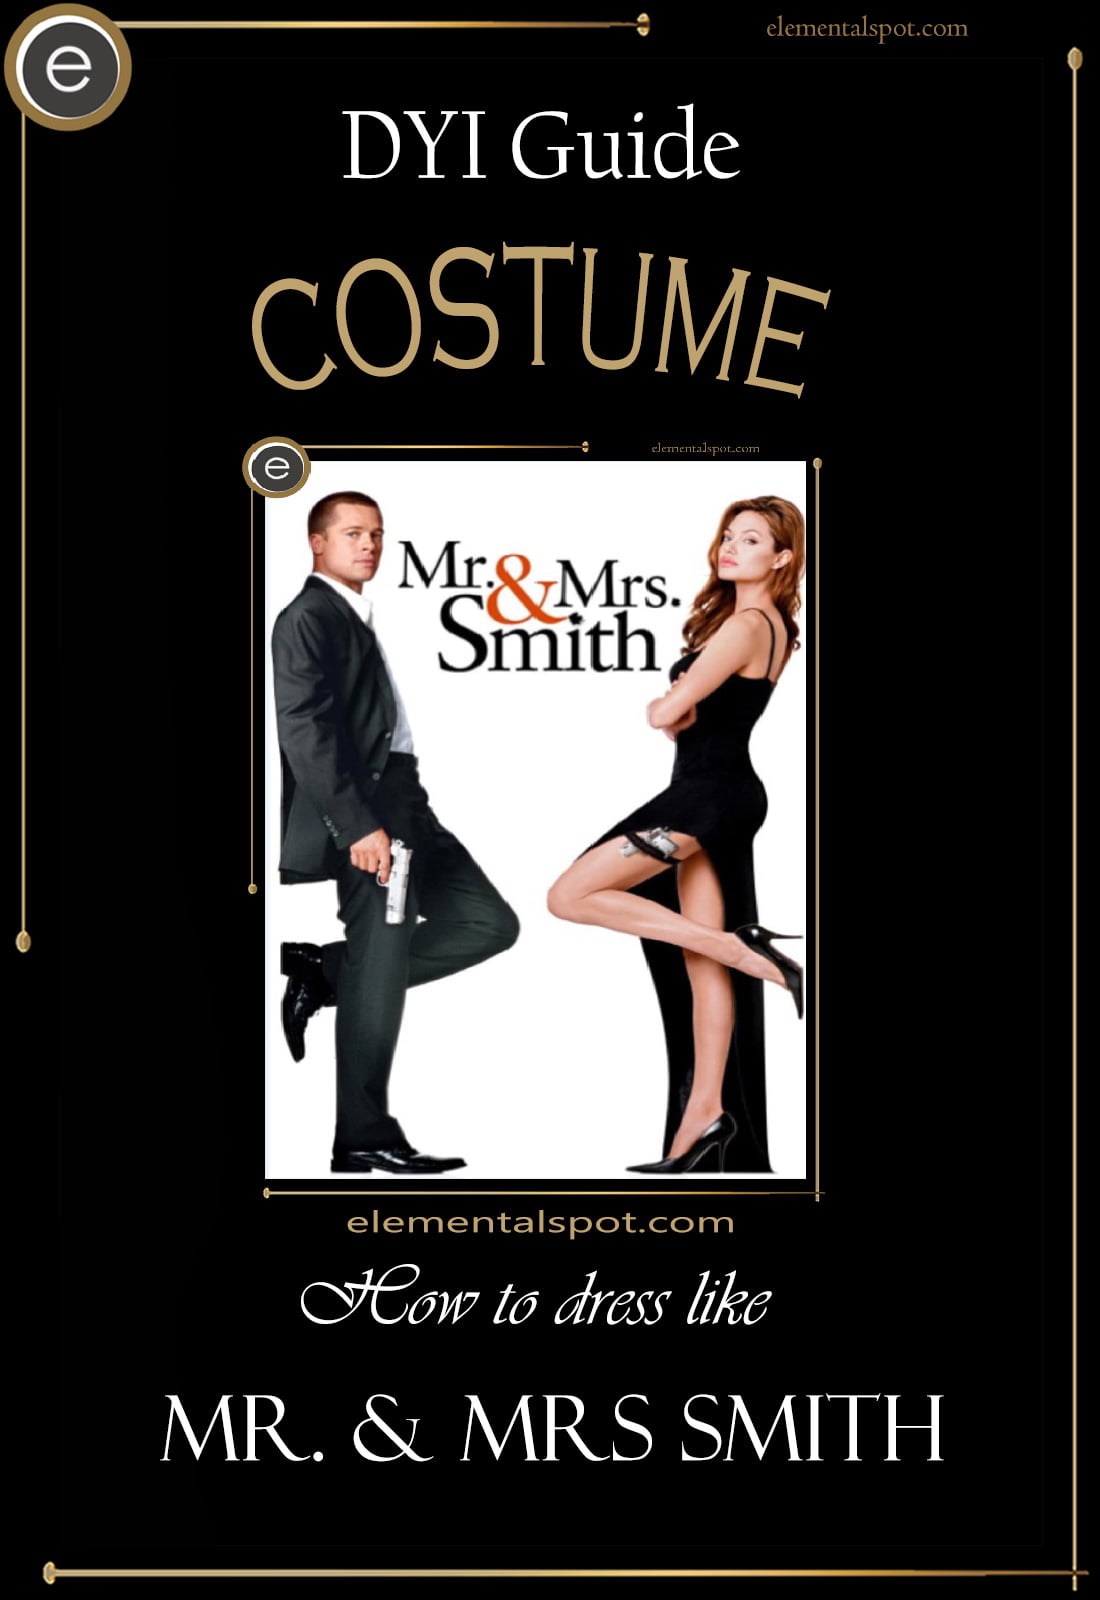 Mr. & Mrs. Smith Costumes - Elemental Spot